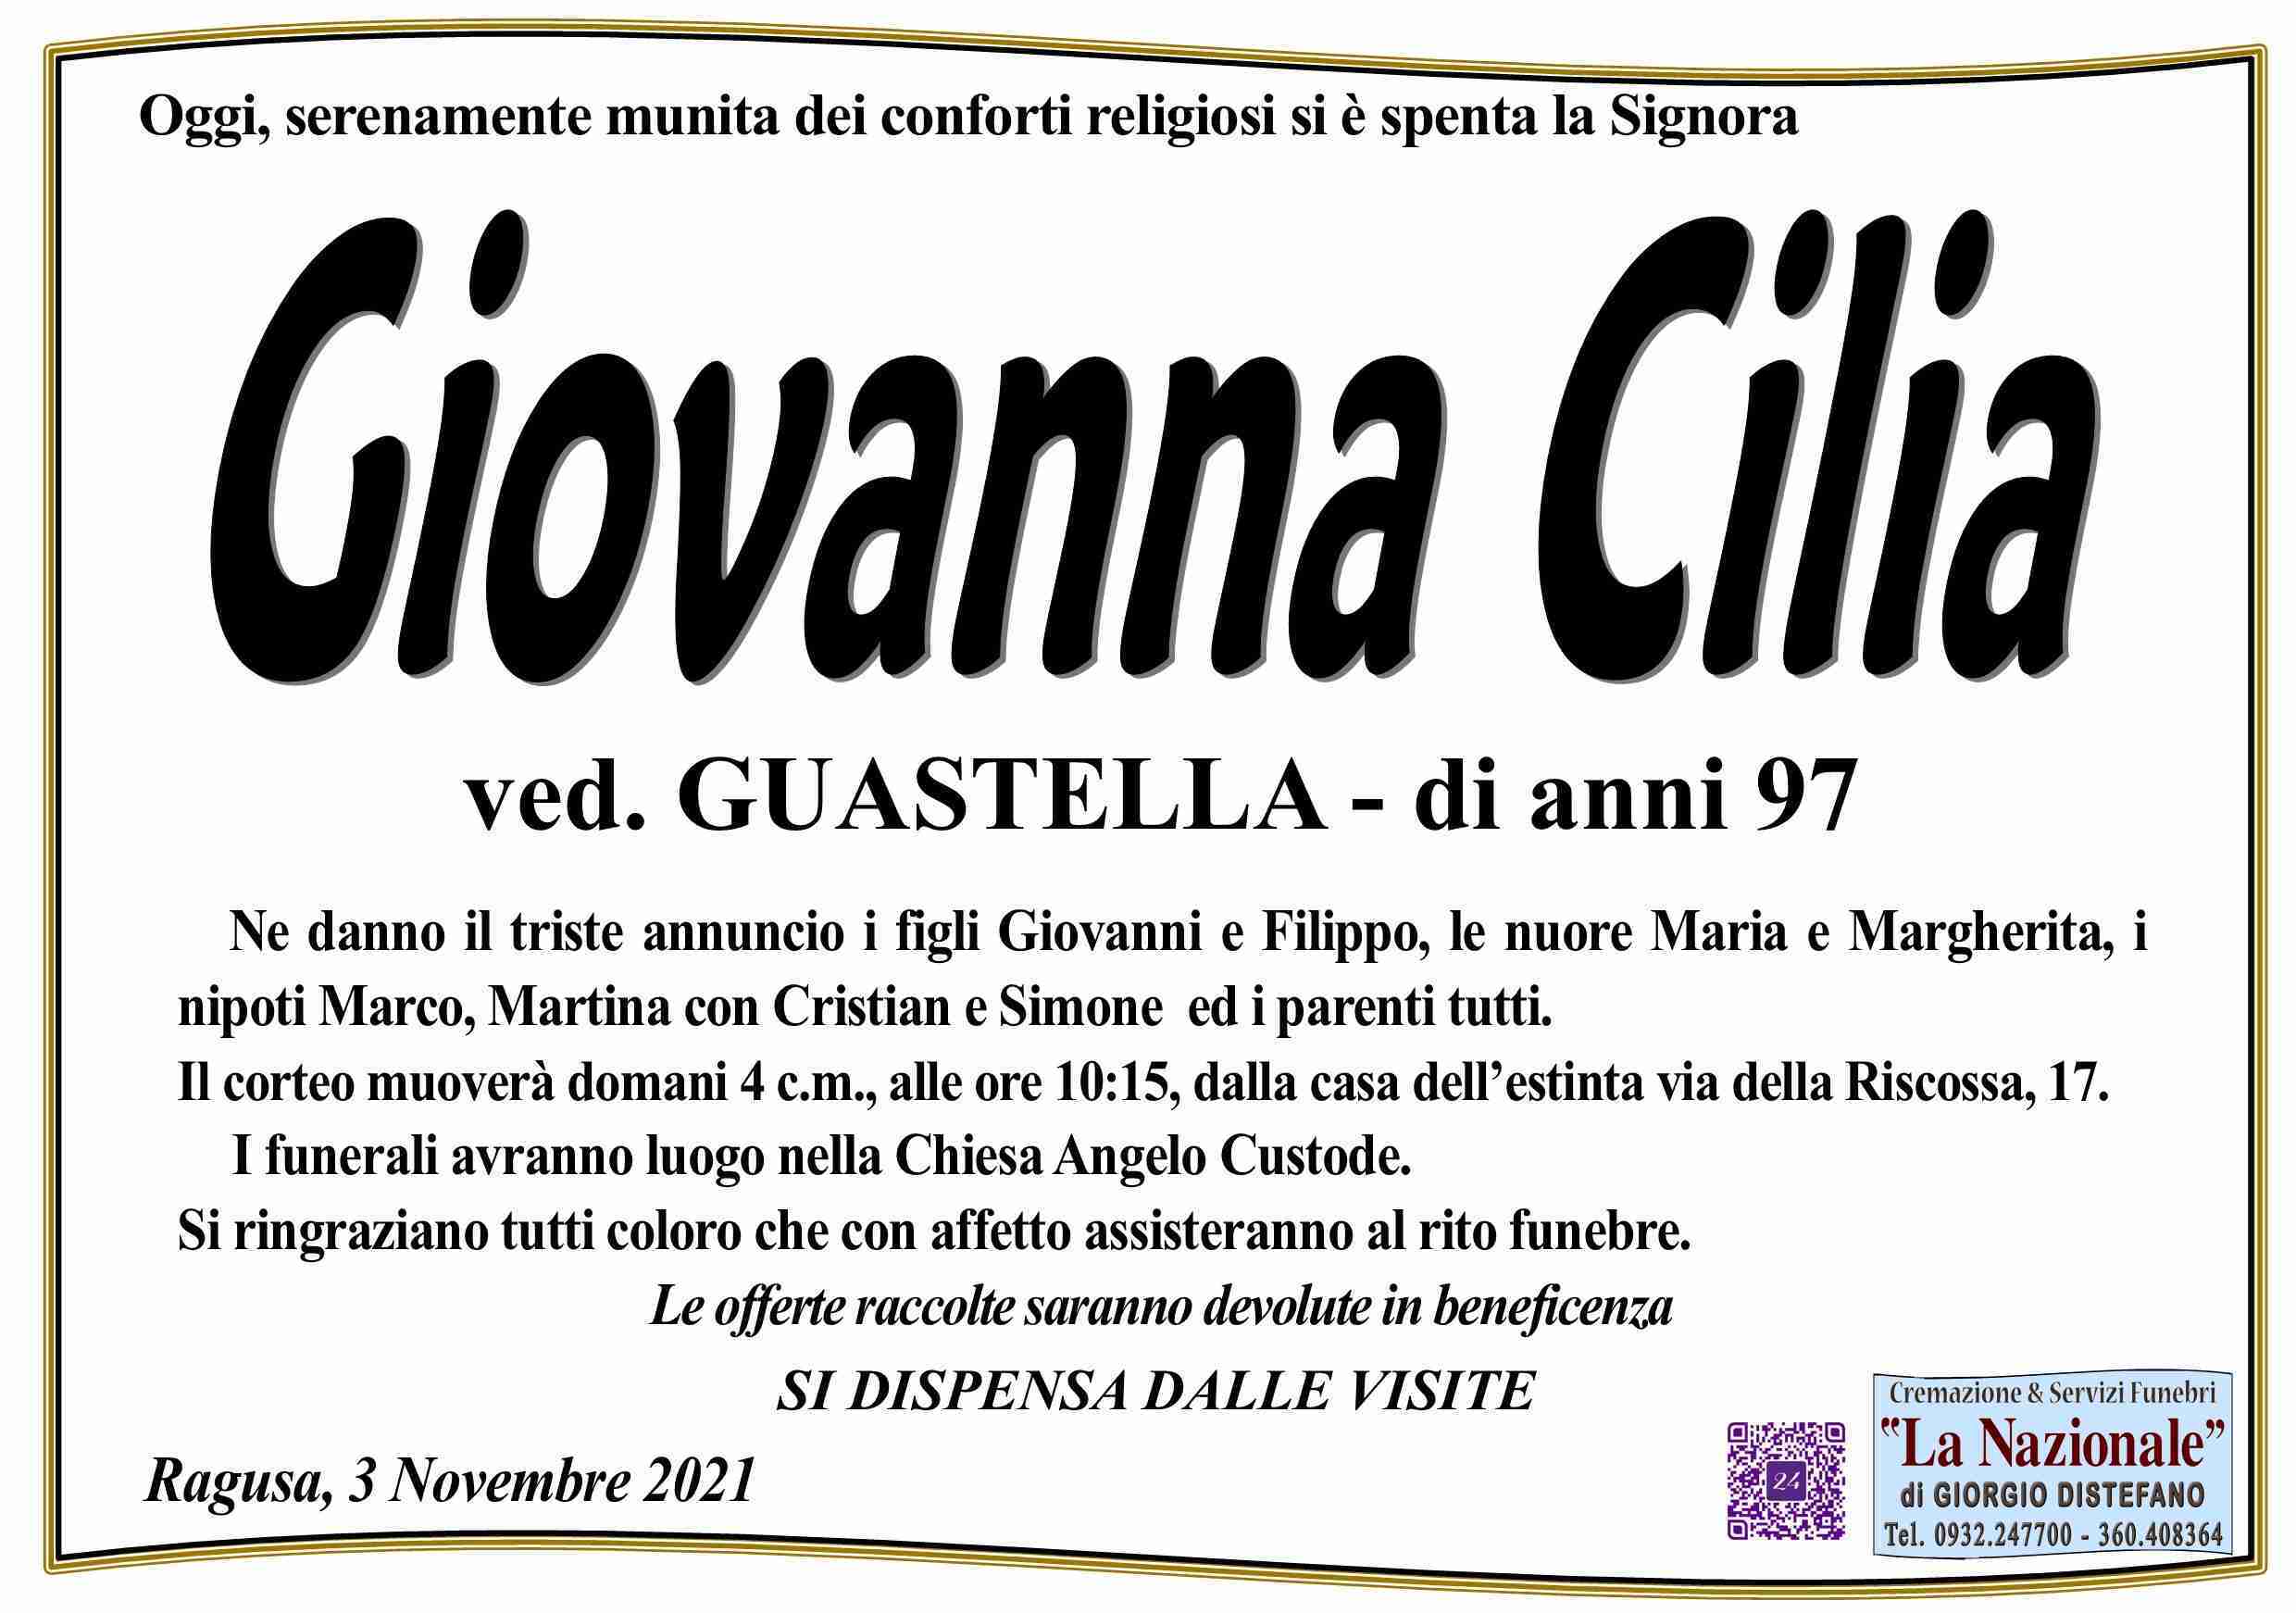 Giovanna Cilia